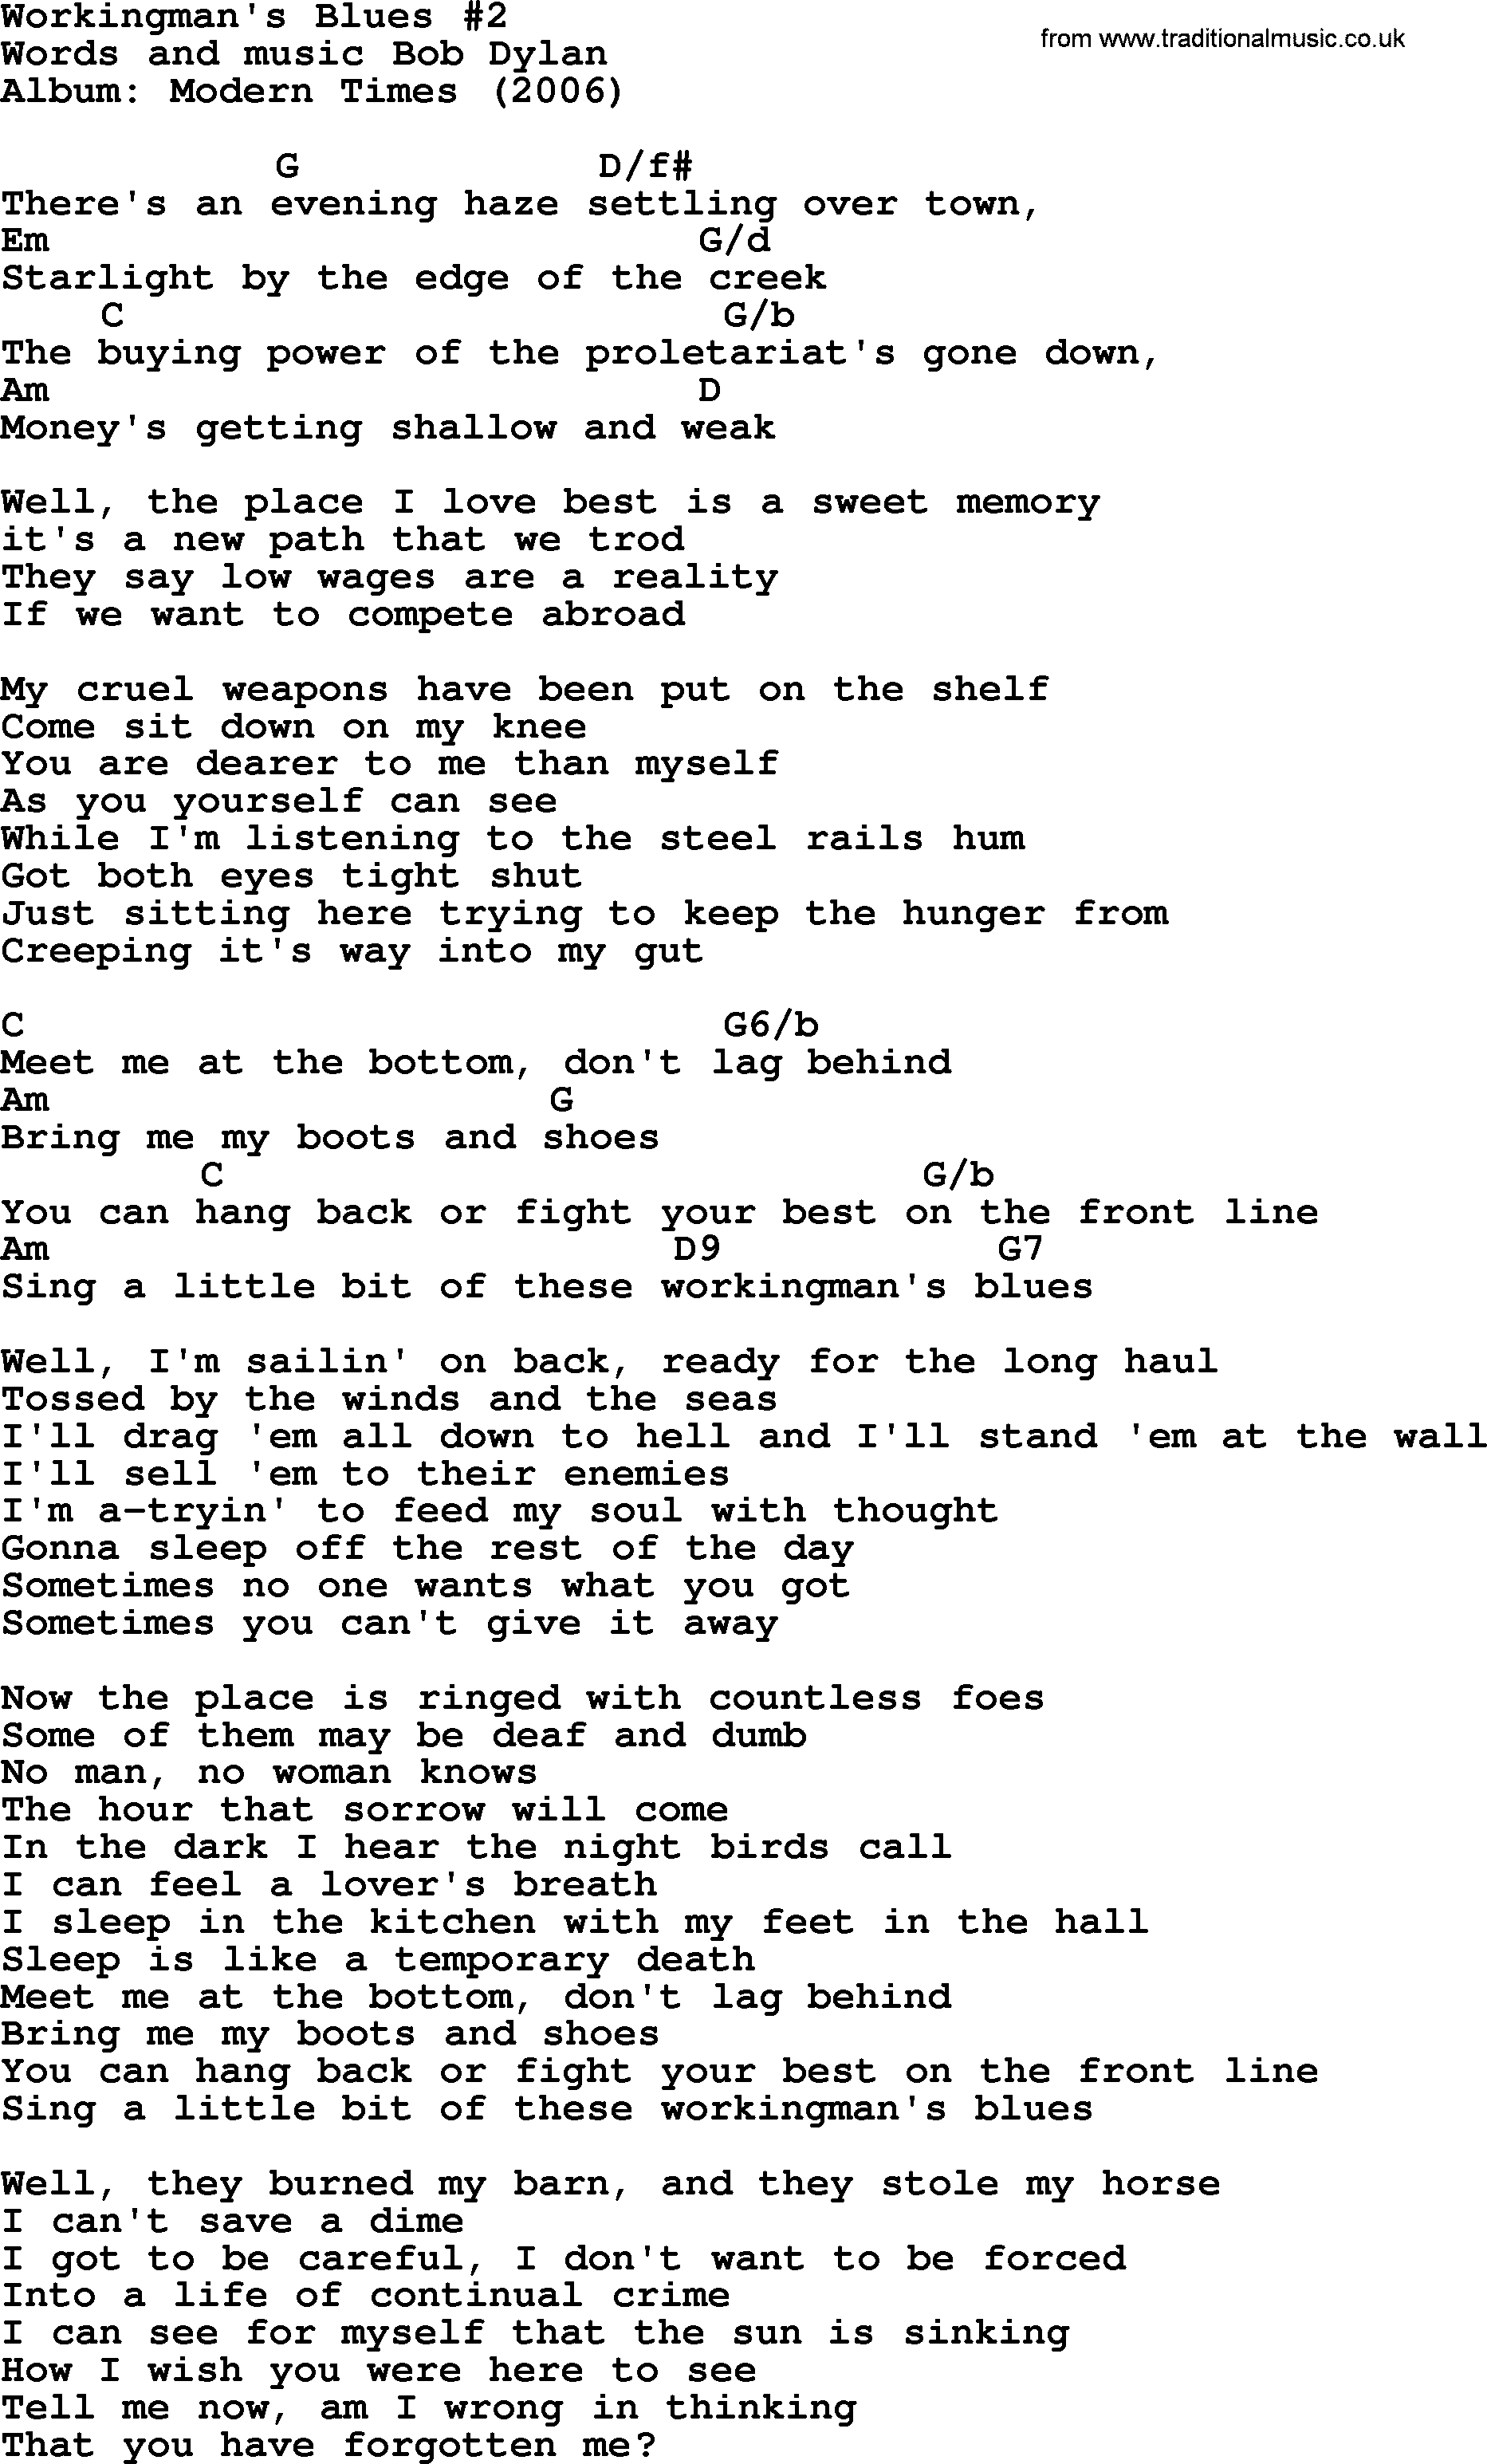 Bob Dylan song, lyrics with chords - Workingman's Blues 2